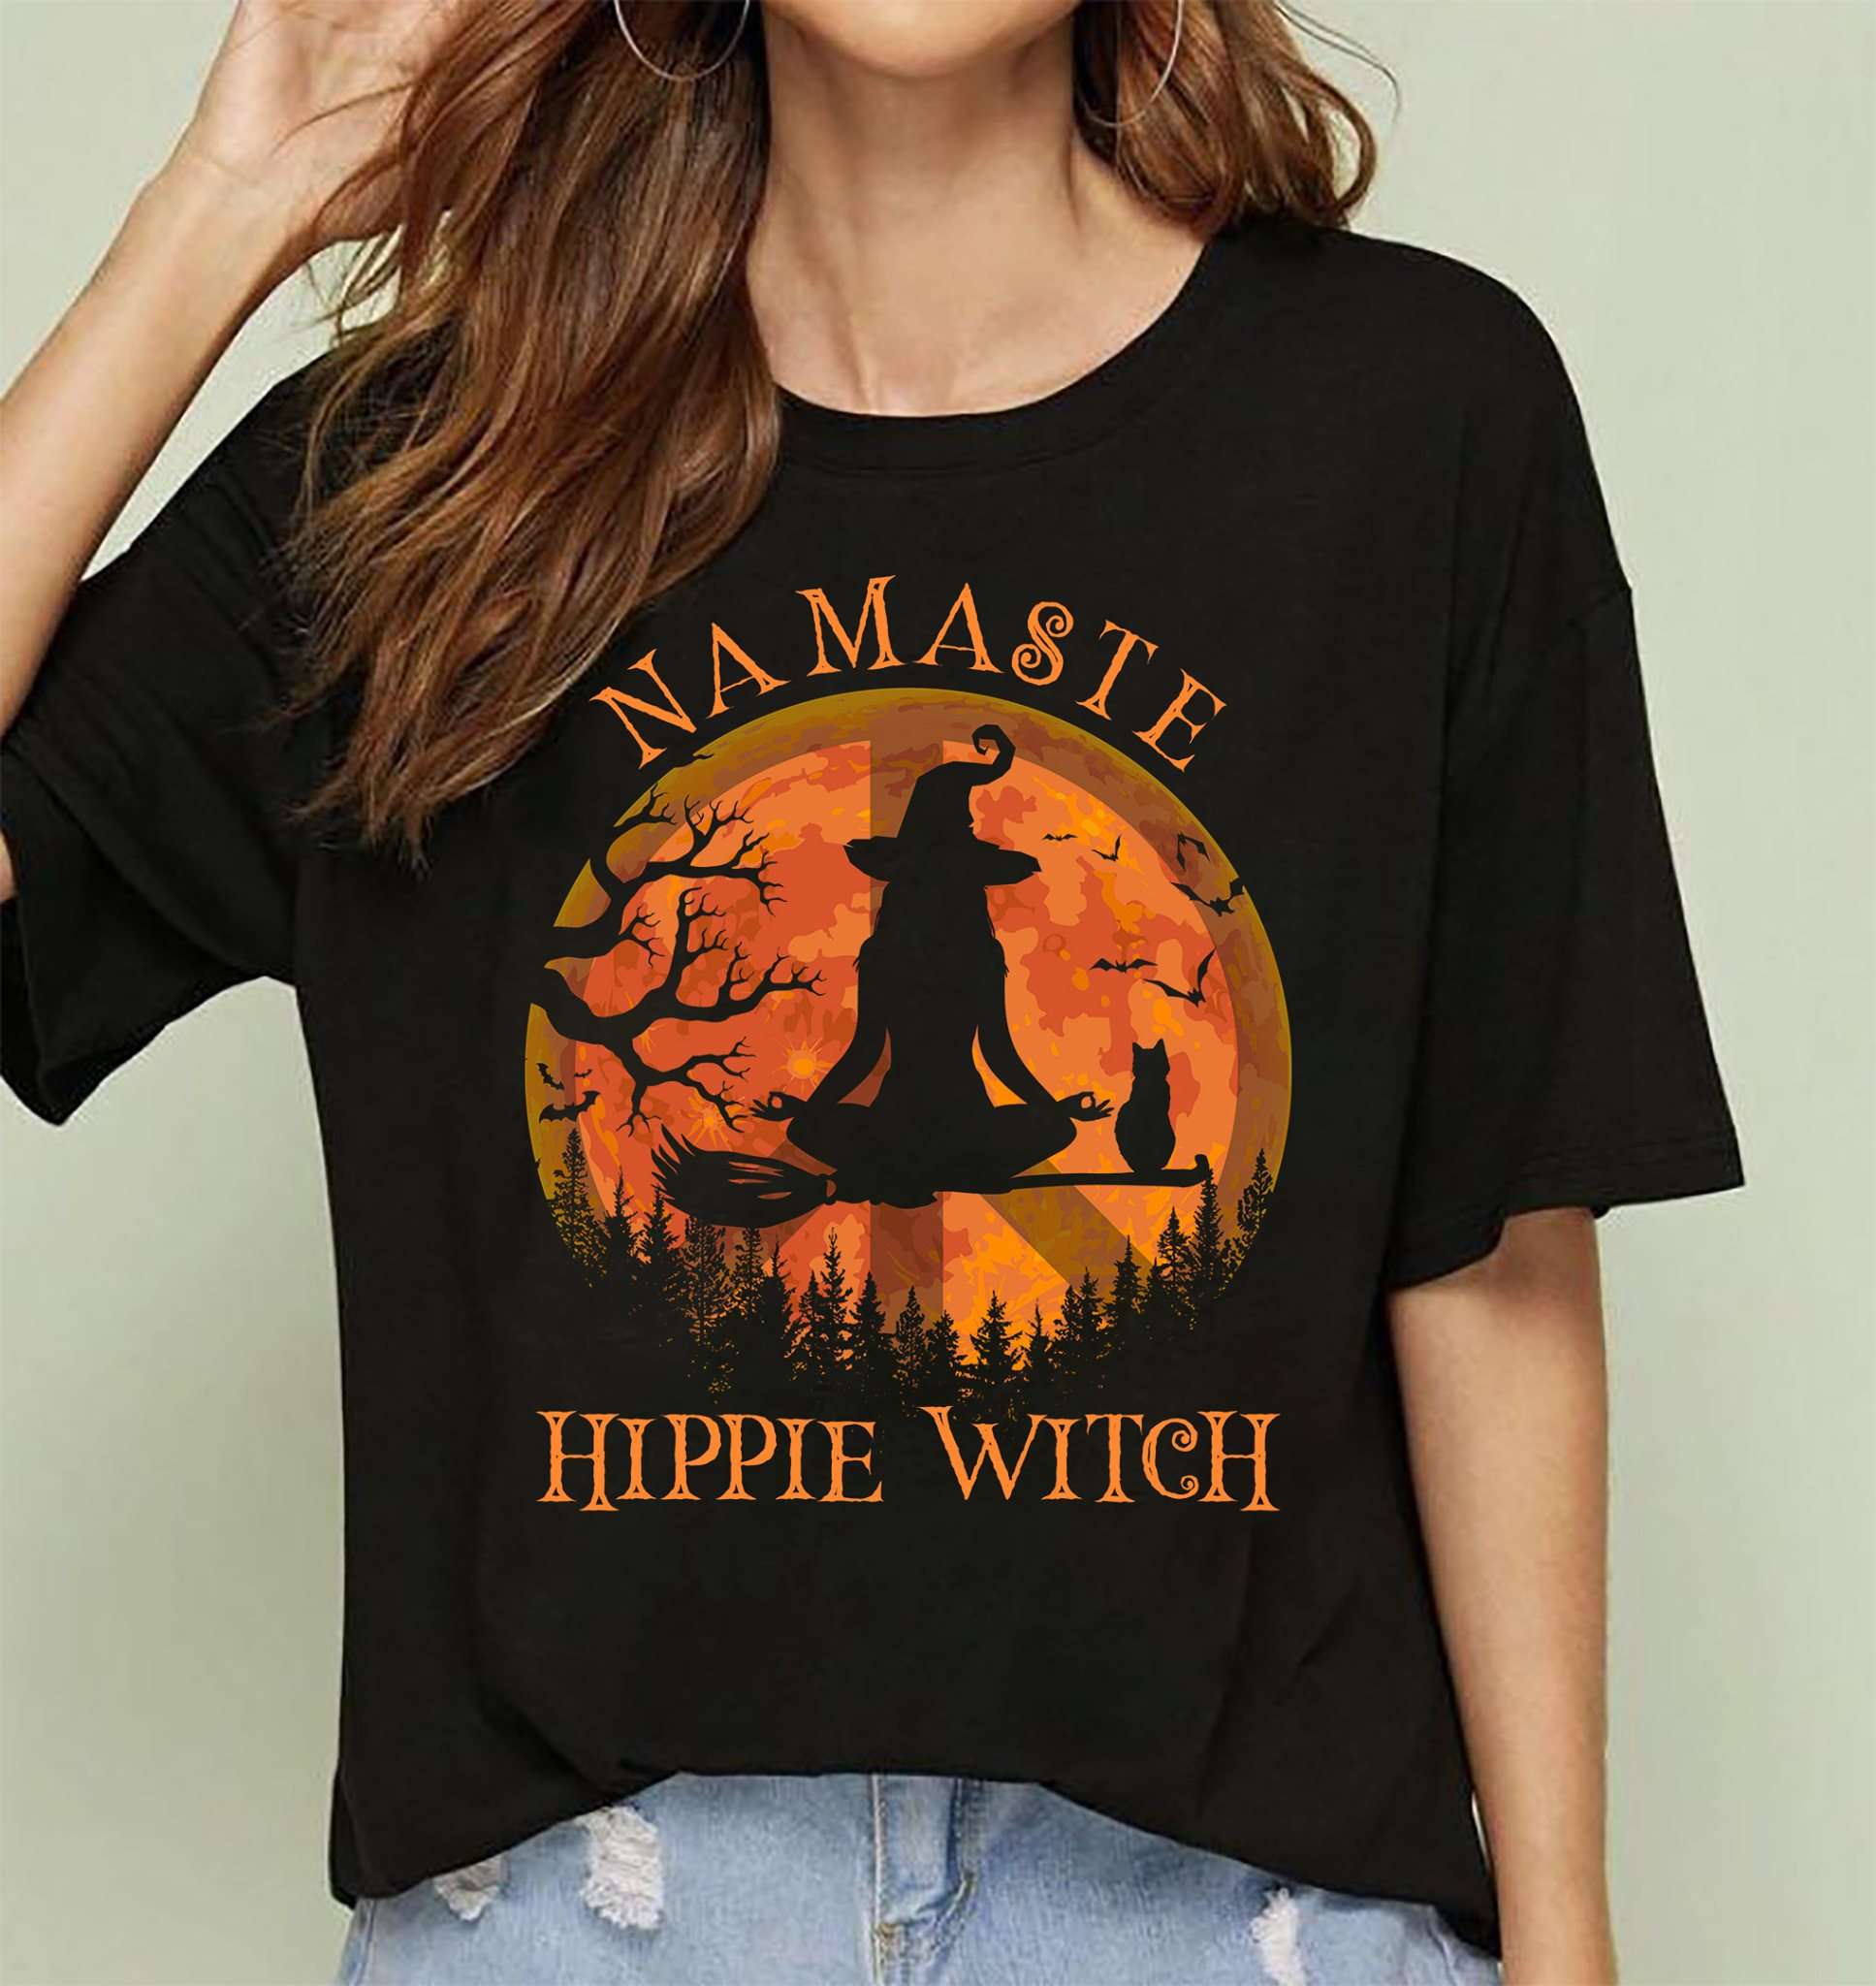 Namaste Hippie Witch - Hippie free lifestyle, Halloween witch costume